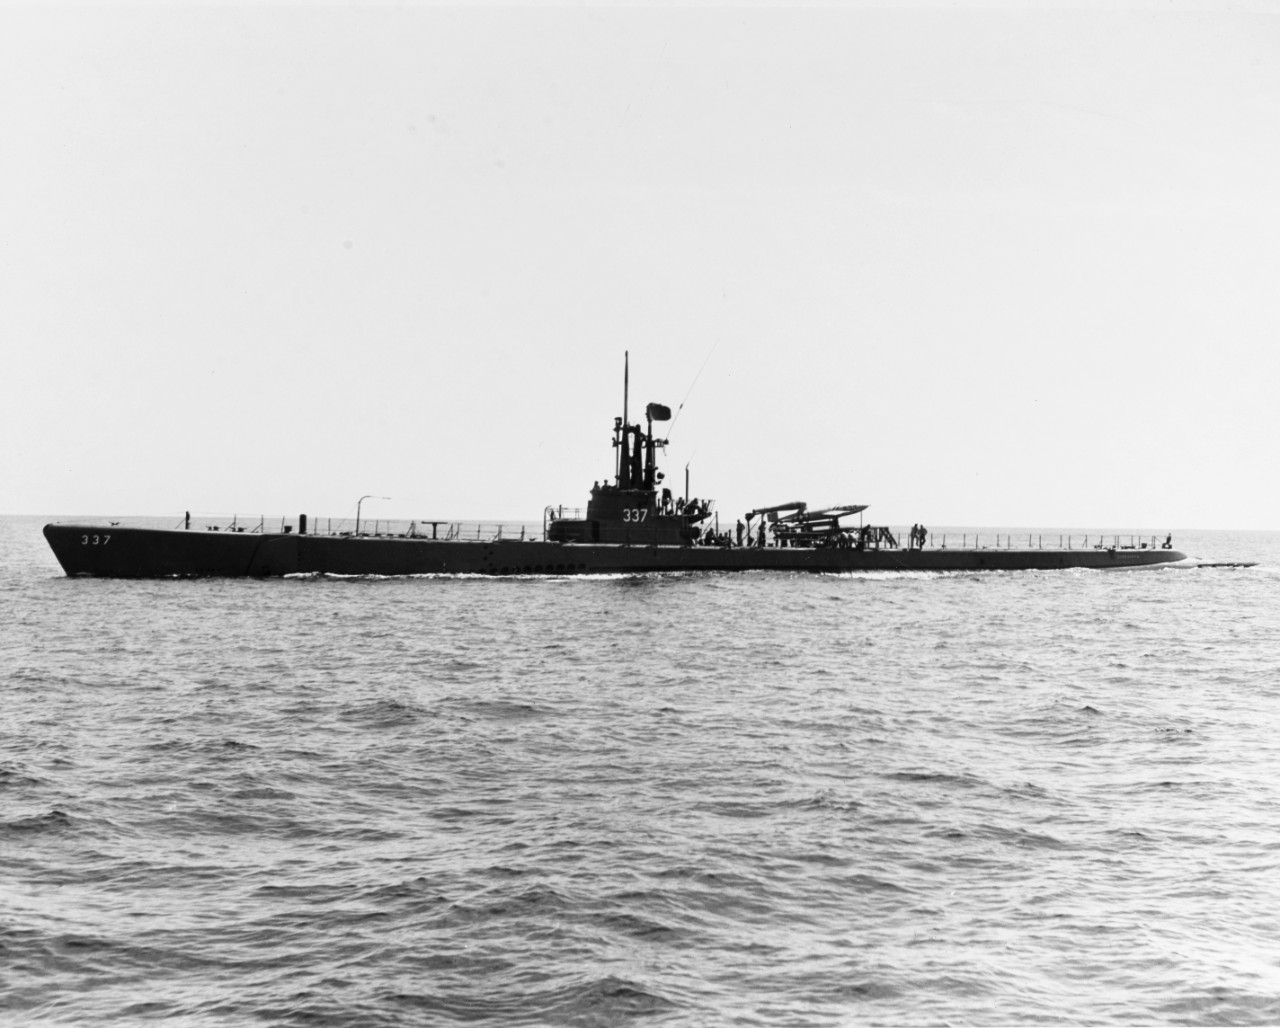 USS Carbonero (SS-337)